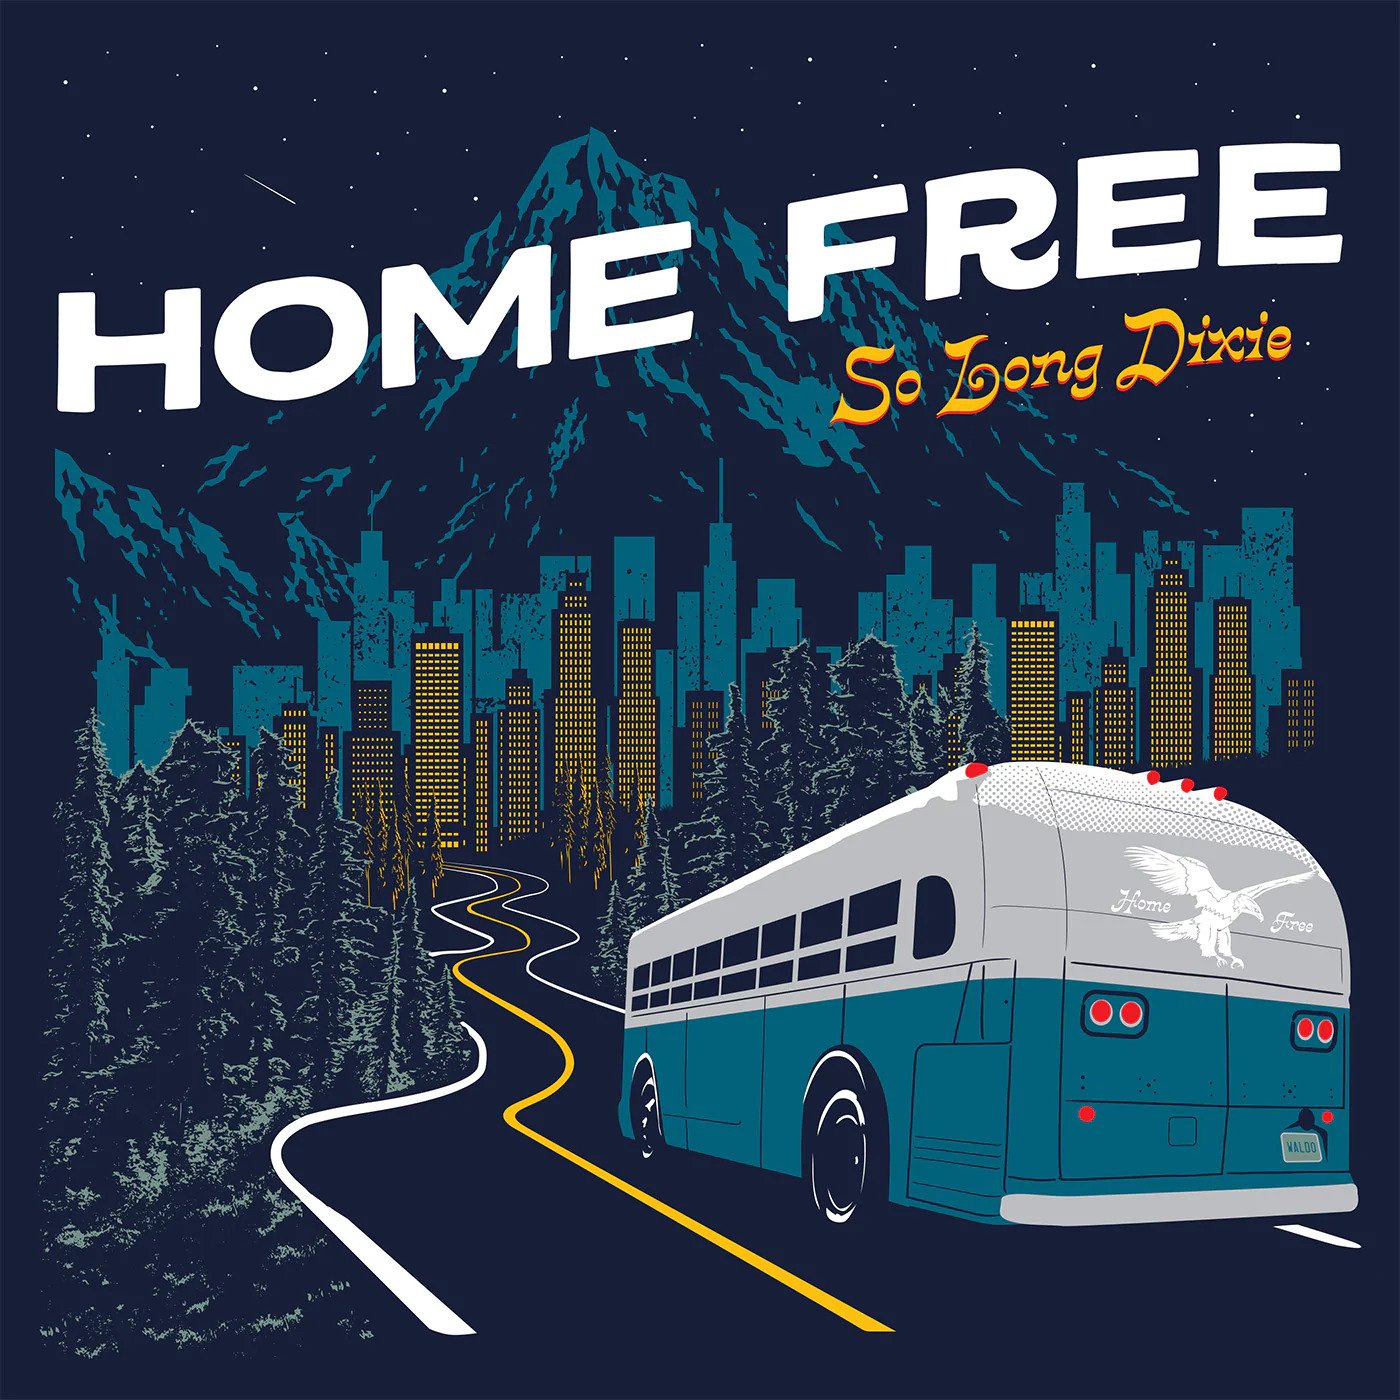 Home Free – So Long Dixie